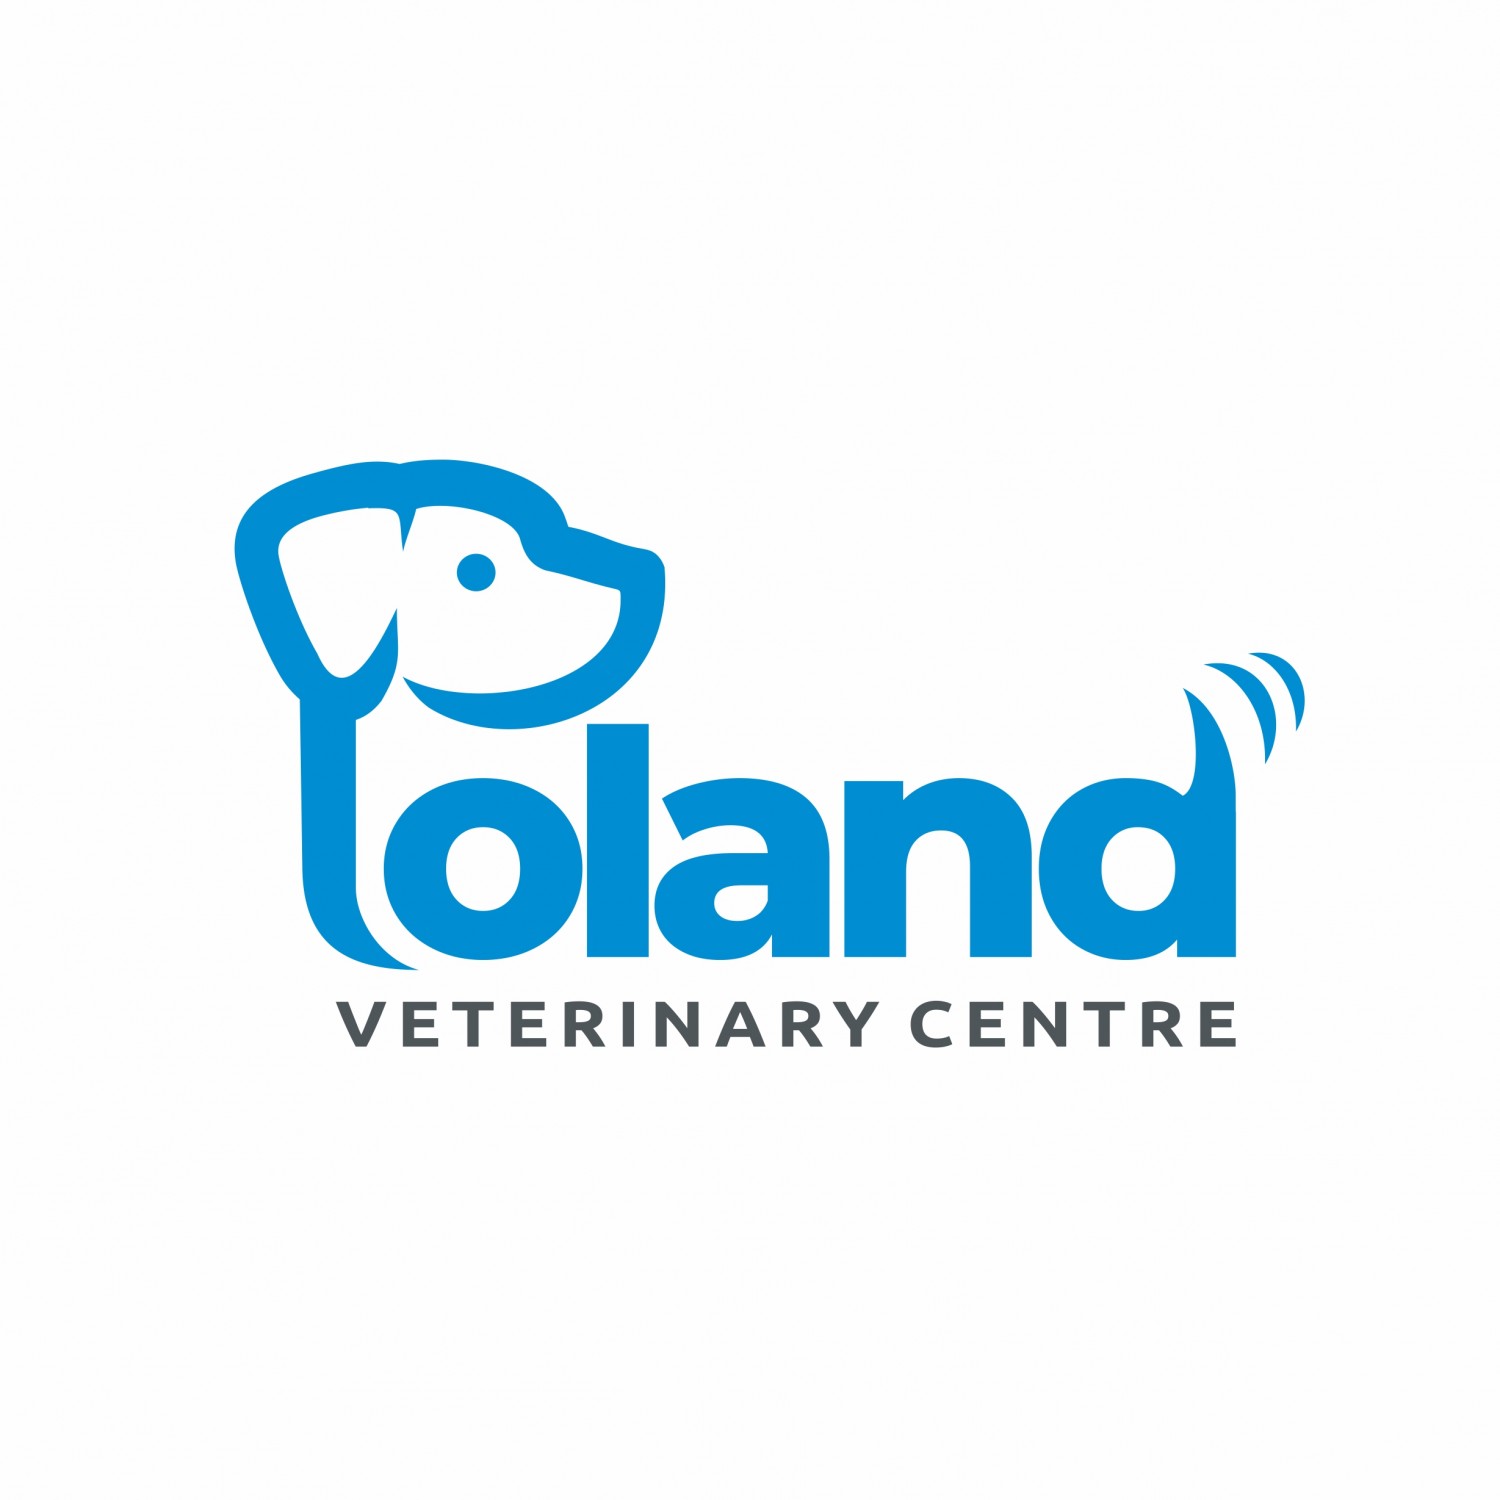 Poland Veterinary Centre Logo